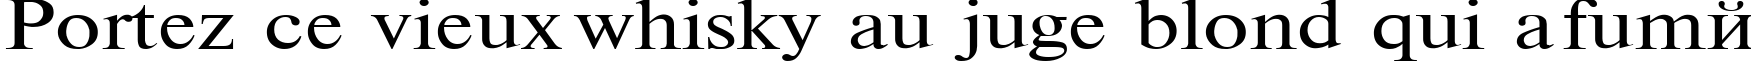 Пример написания шрифтом TimesET110 текста на французском